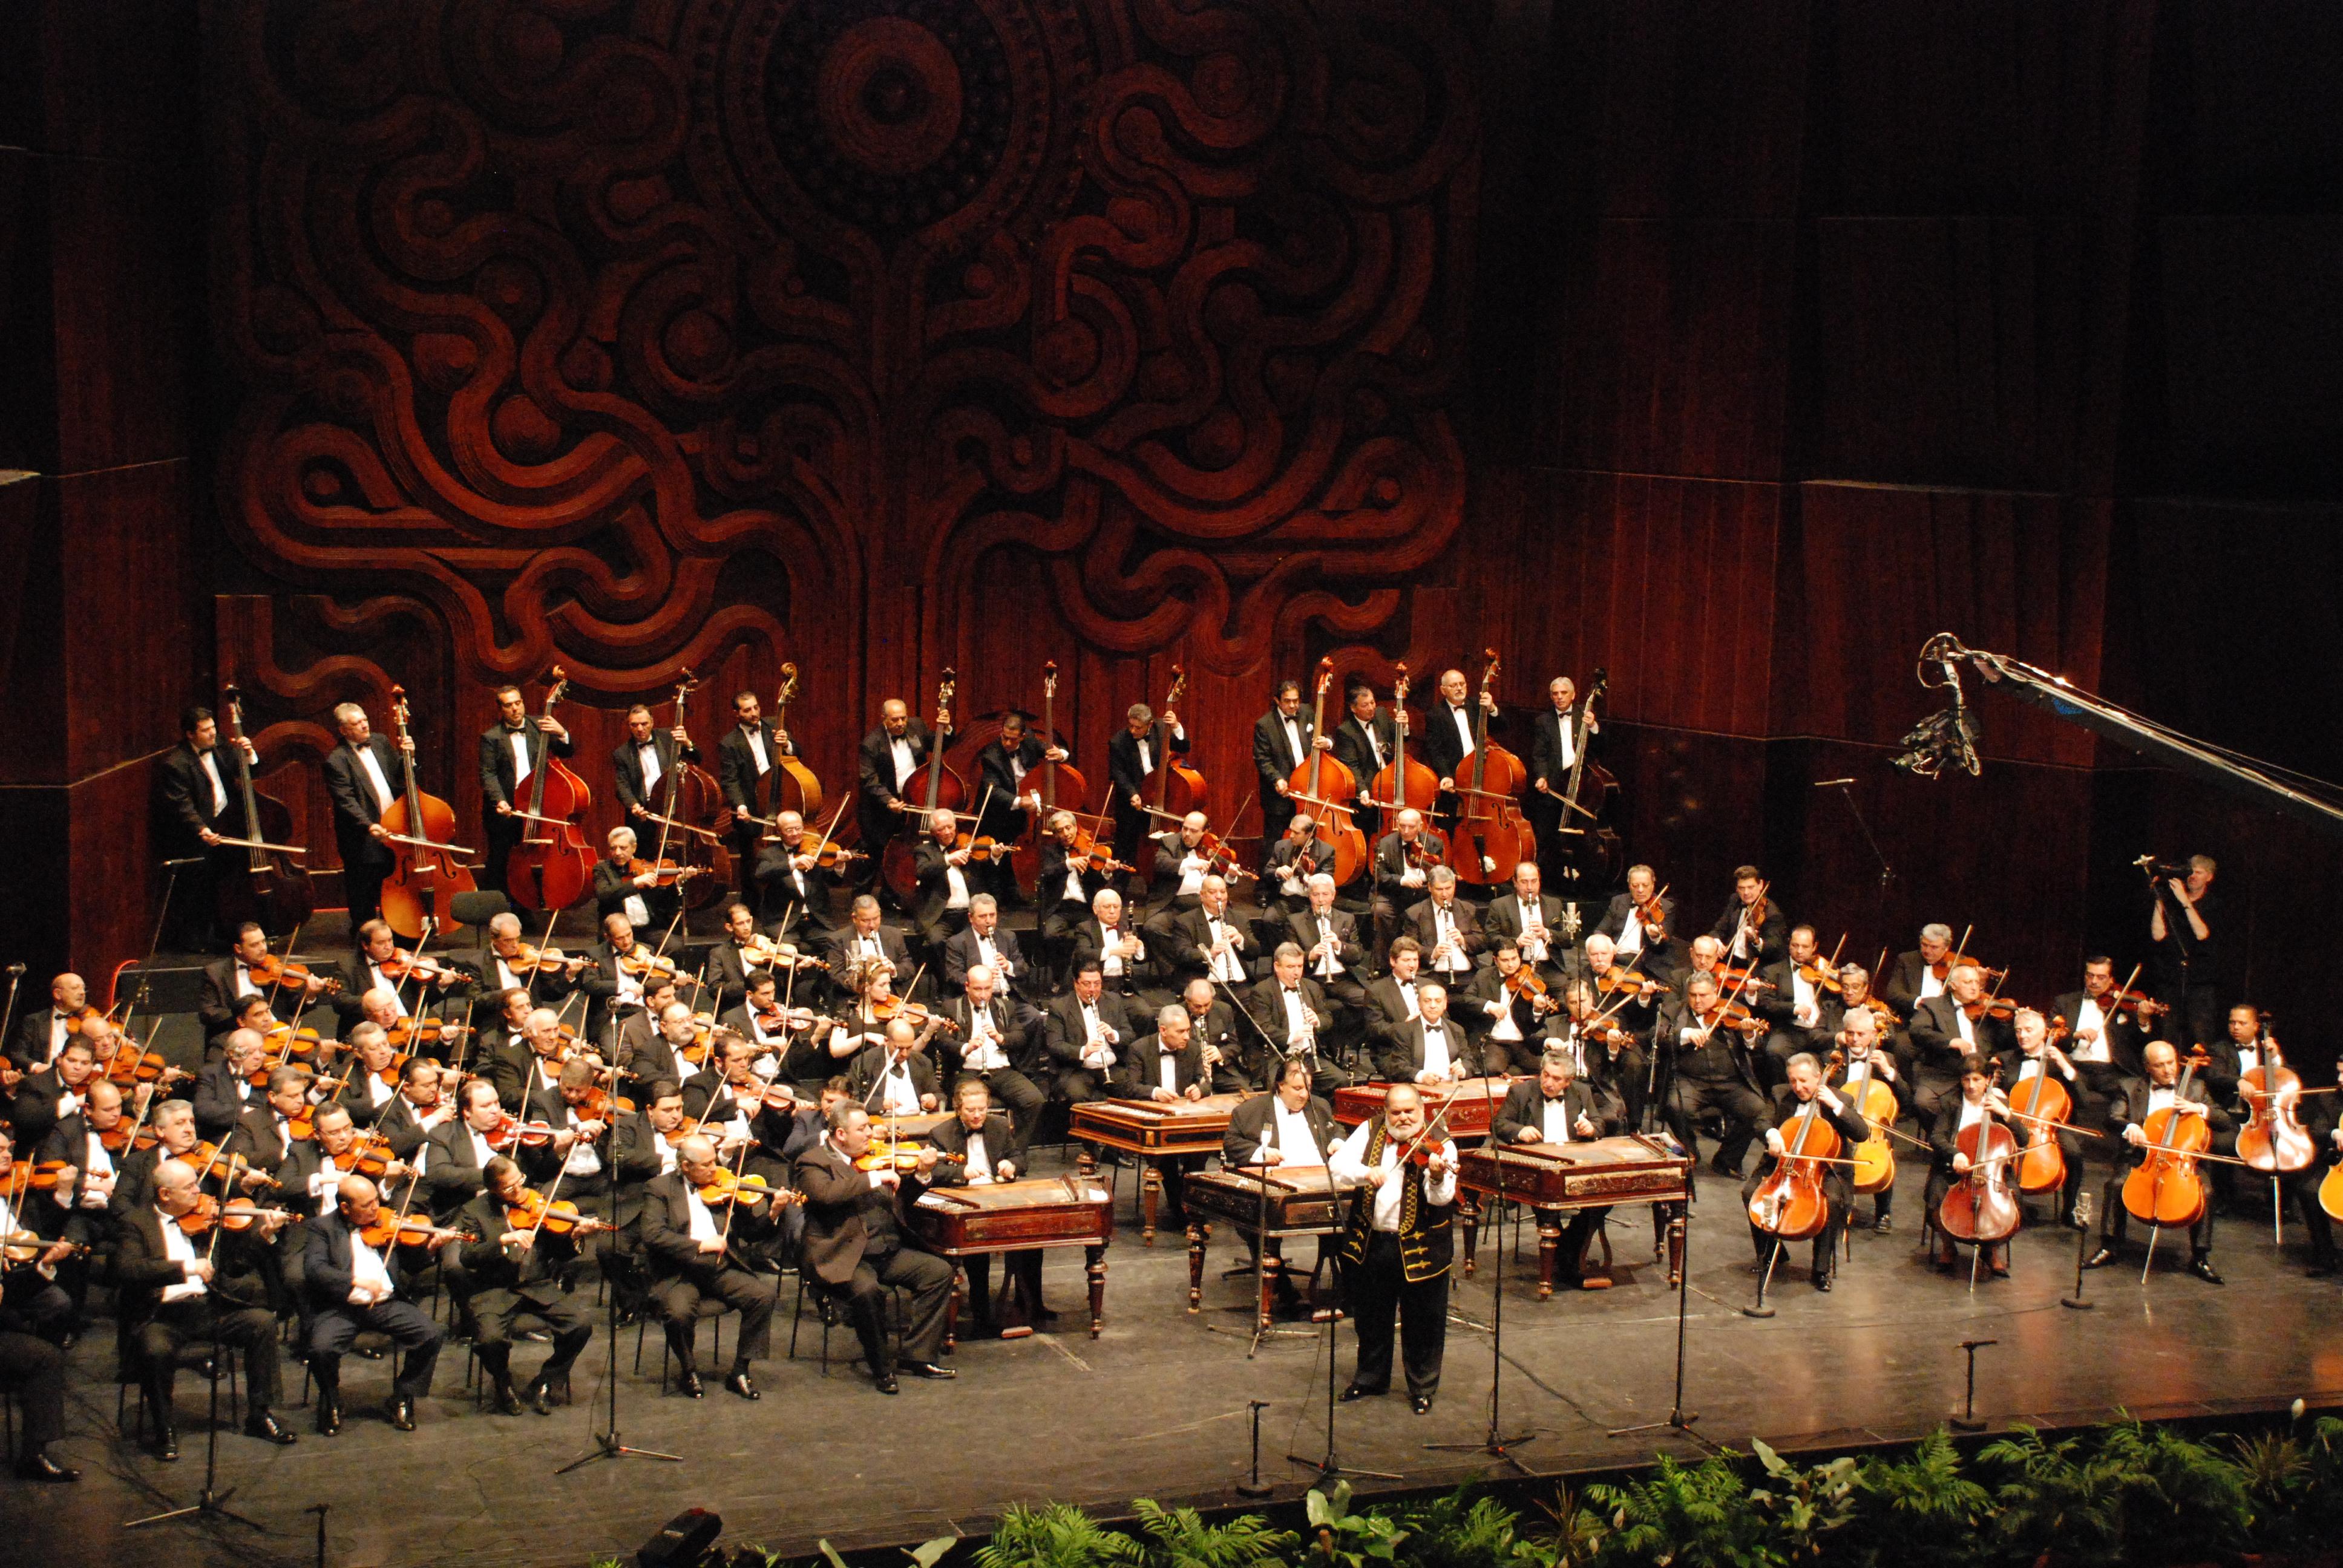 Invitation: Gala Concert - 100 Member Gipsy Orchestra, Budapest, 30 Dec